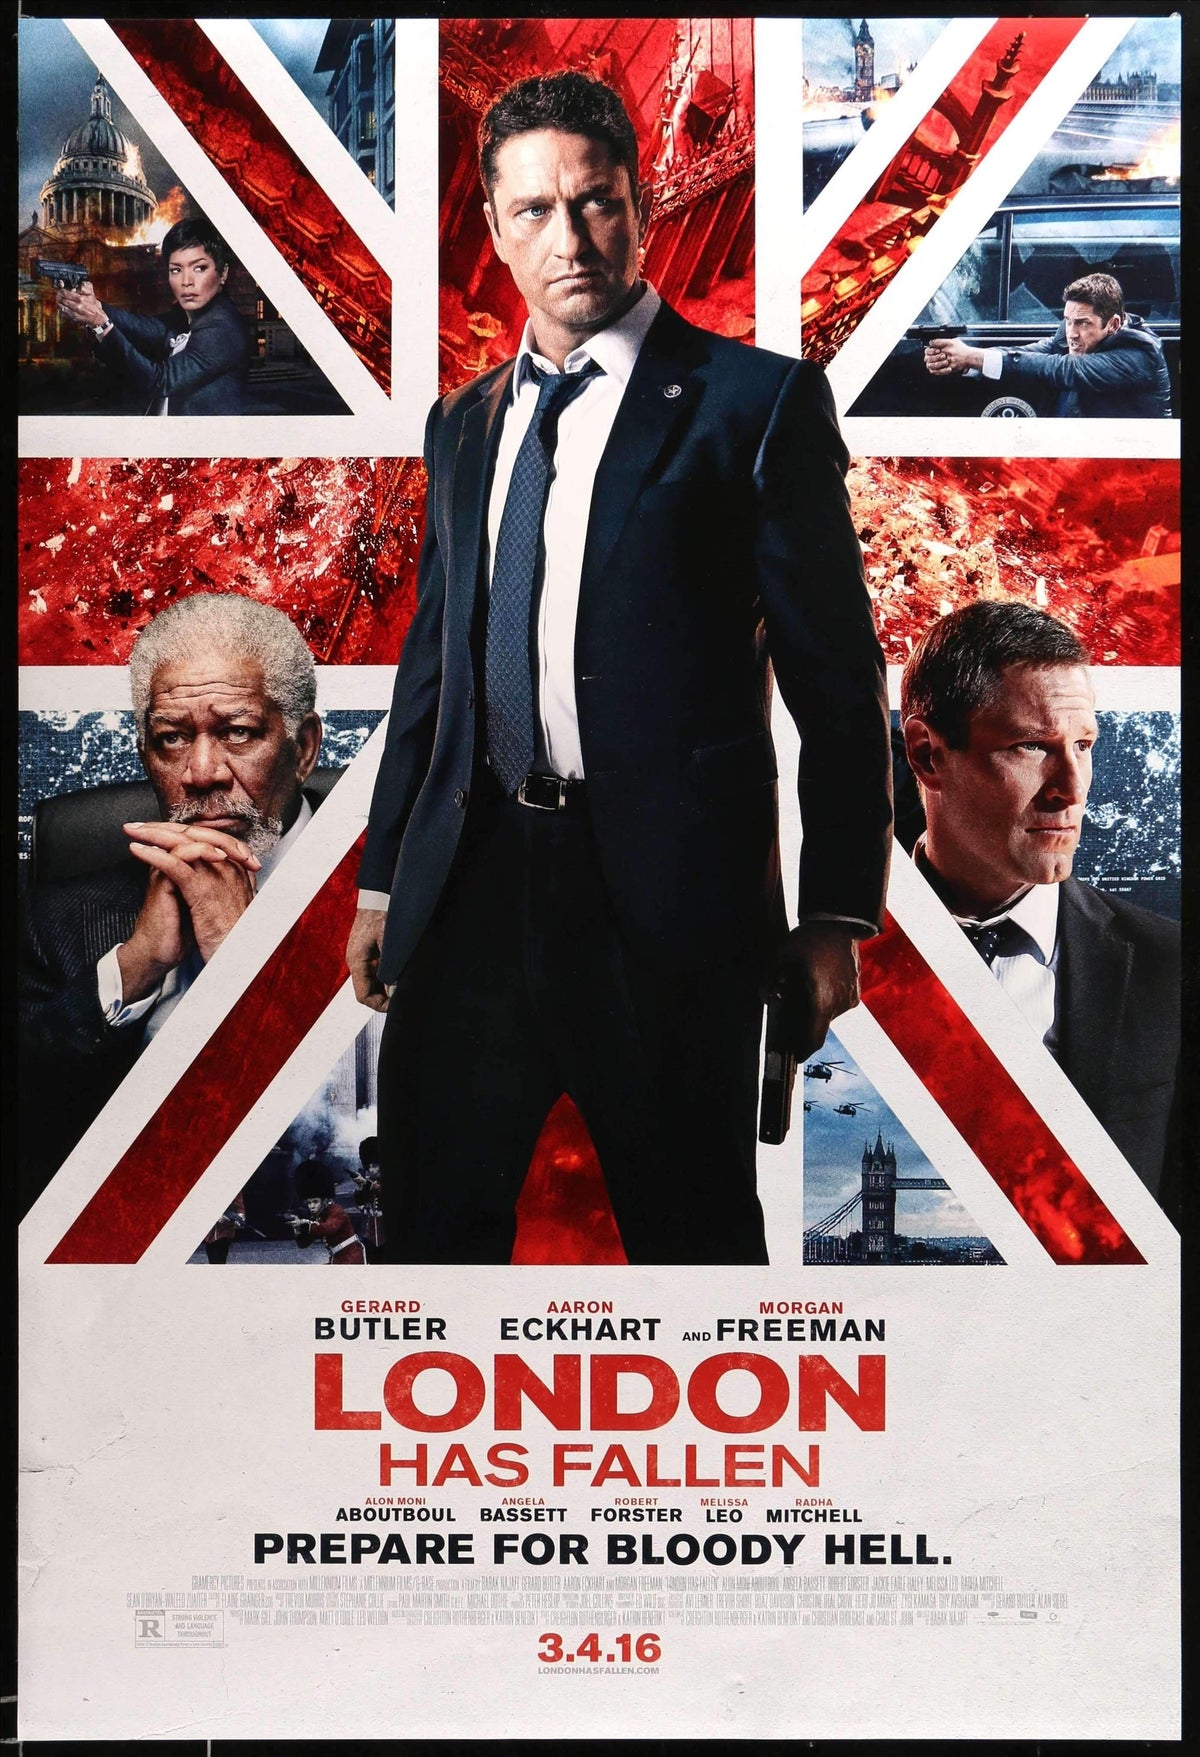 London Has Fallen (2016) original movie poster for sale at Original Film Art